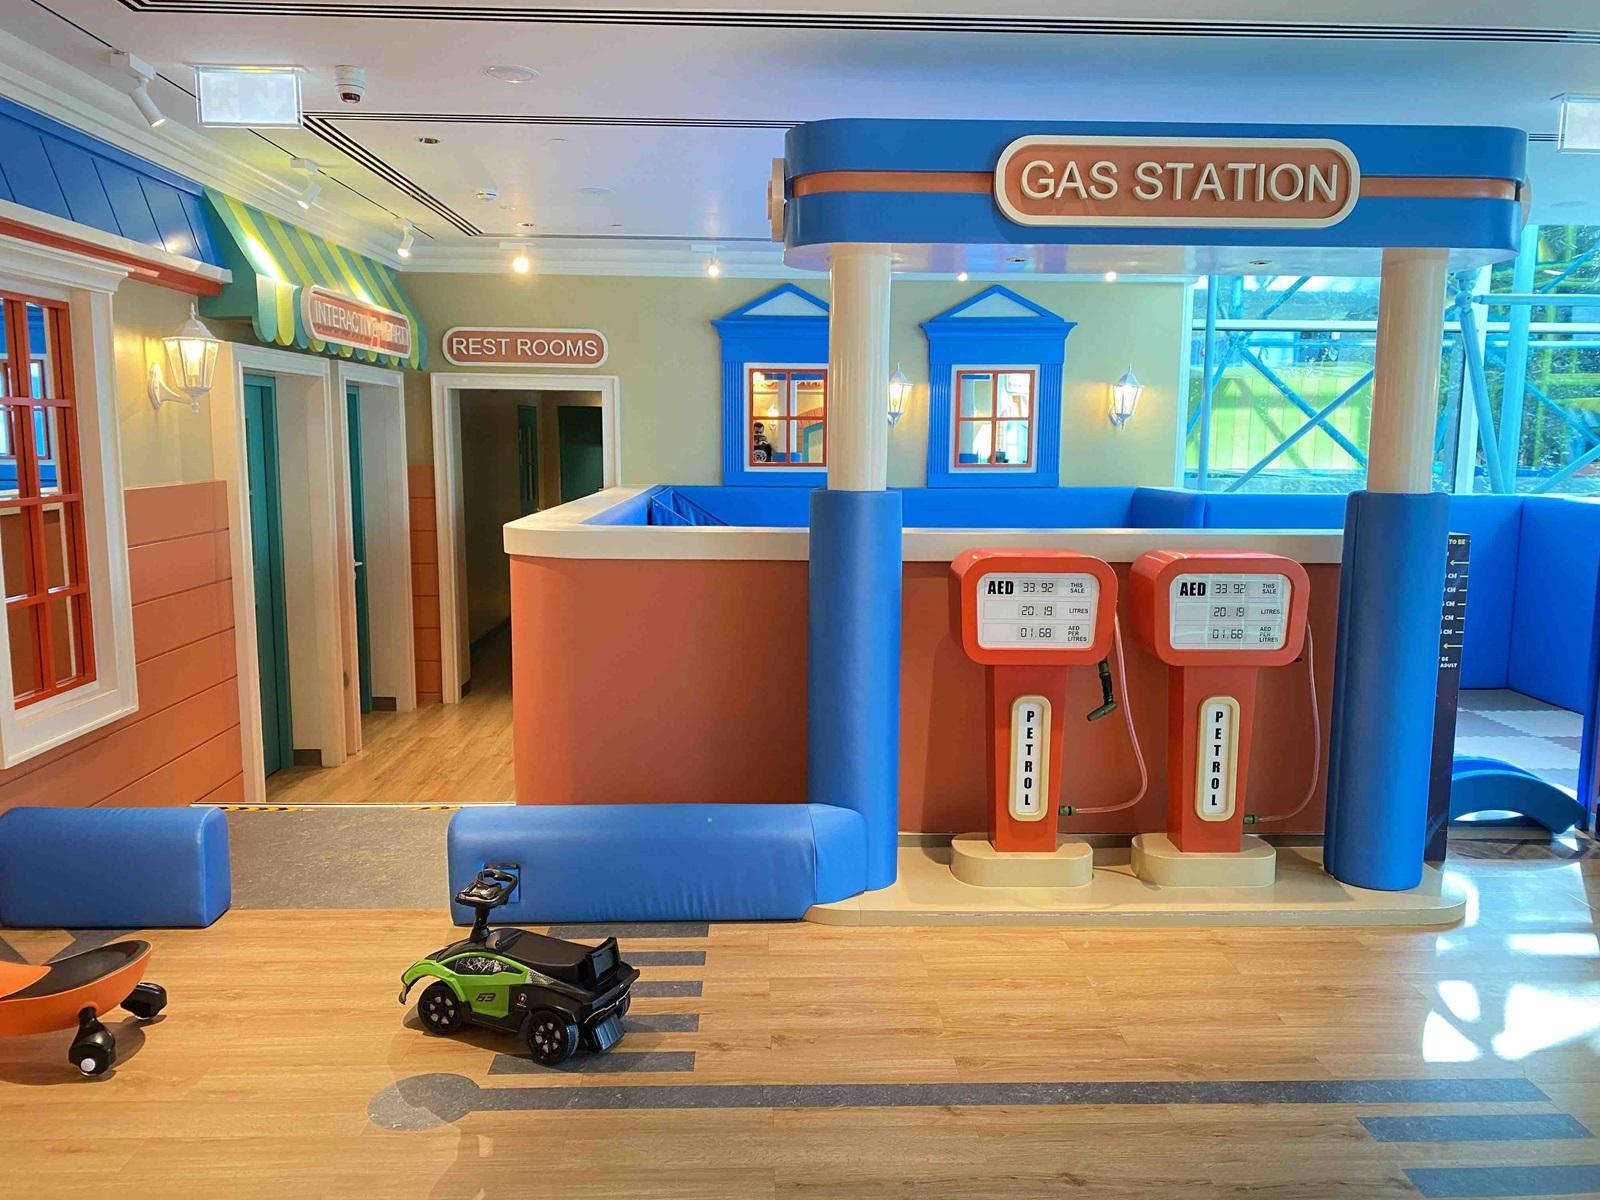 Grand Hyatt Dubai Kids Club Roli Poli Gas Station